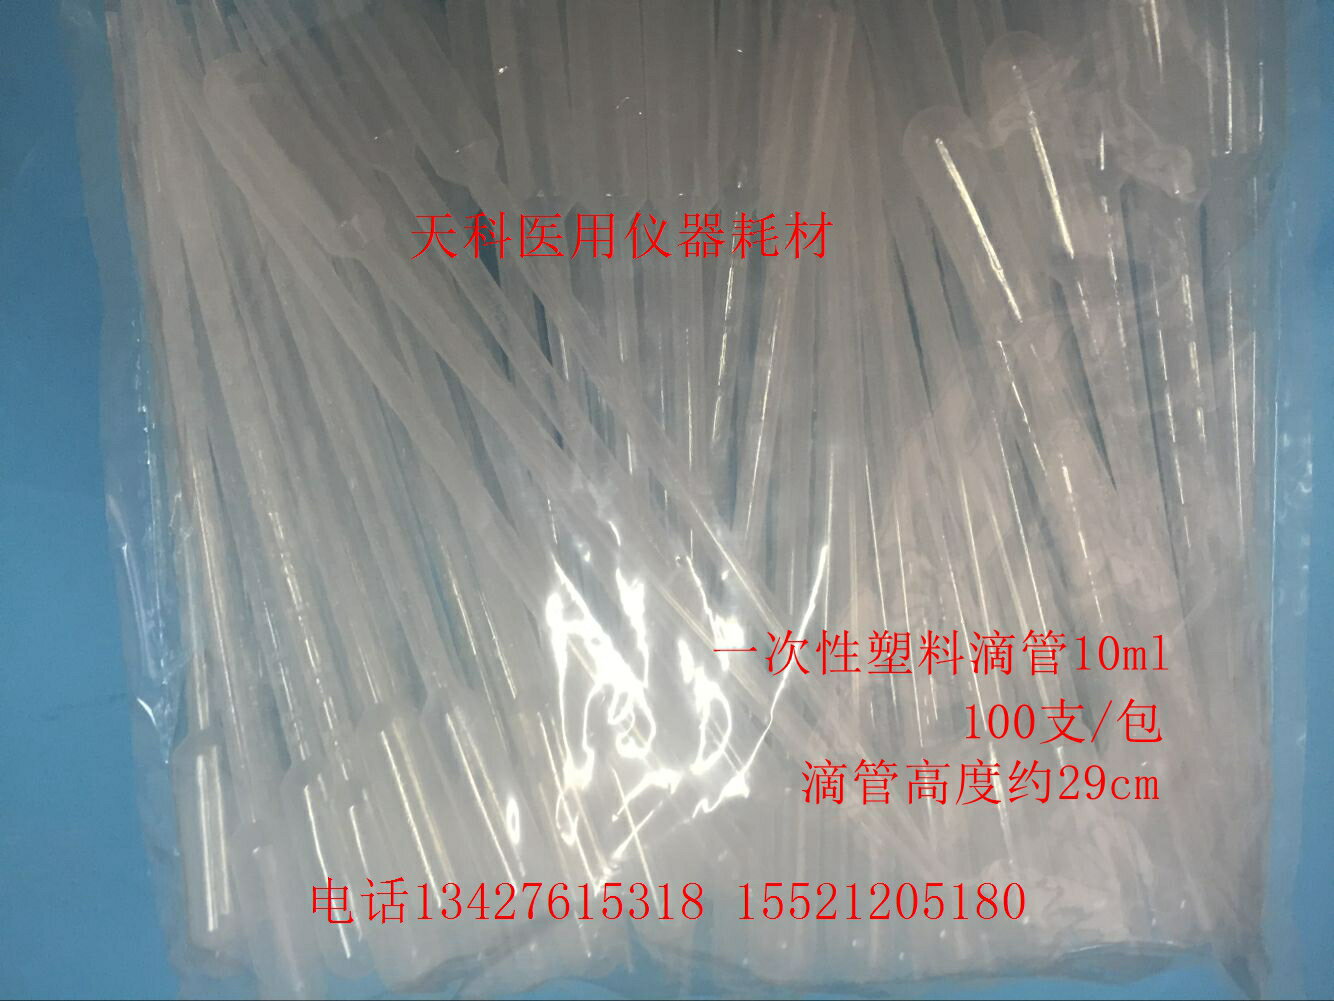 10ml塑料吸管,一次性塑料吸管,塑料滴管 巴氏吸管/尿液吸管帶刻度